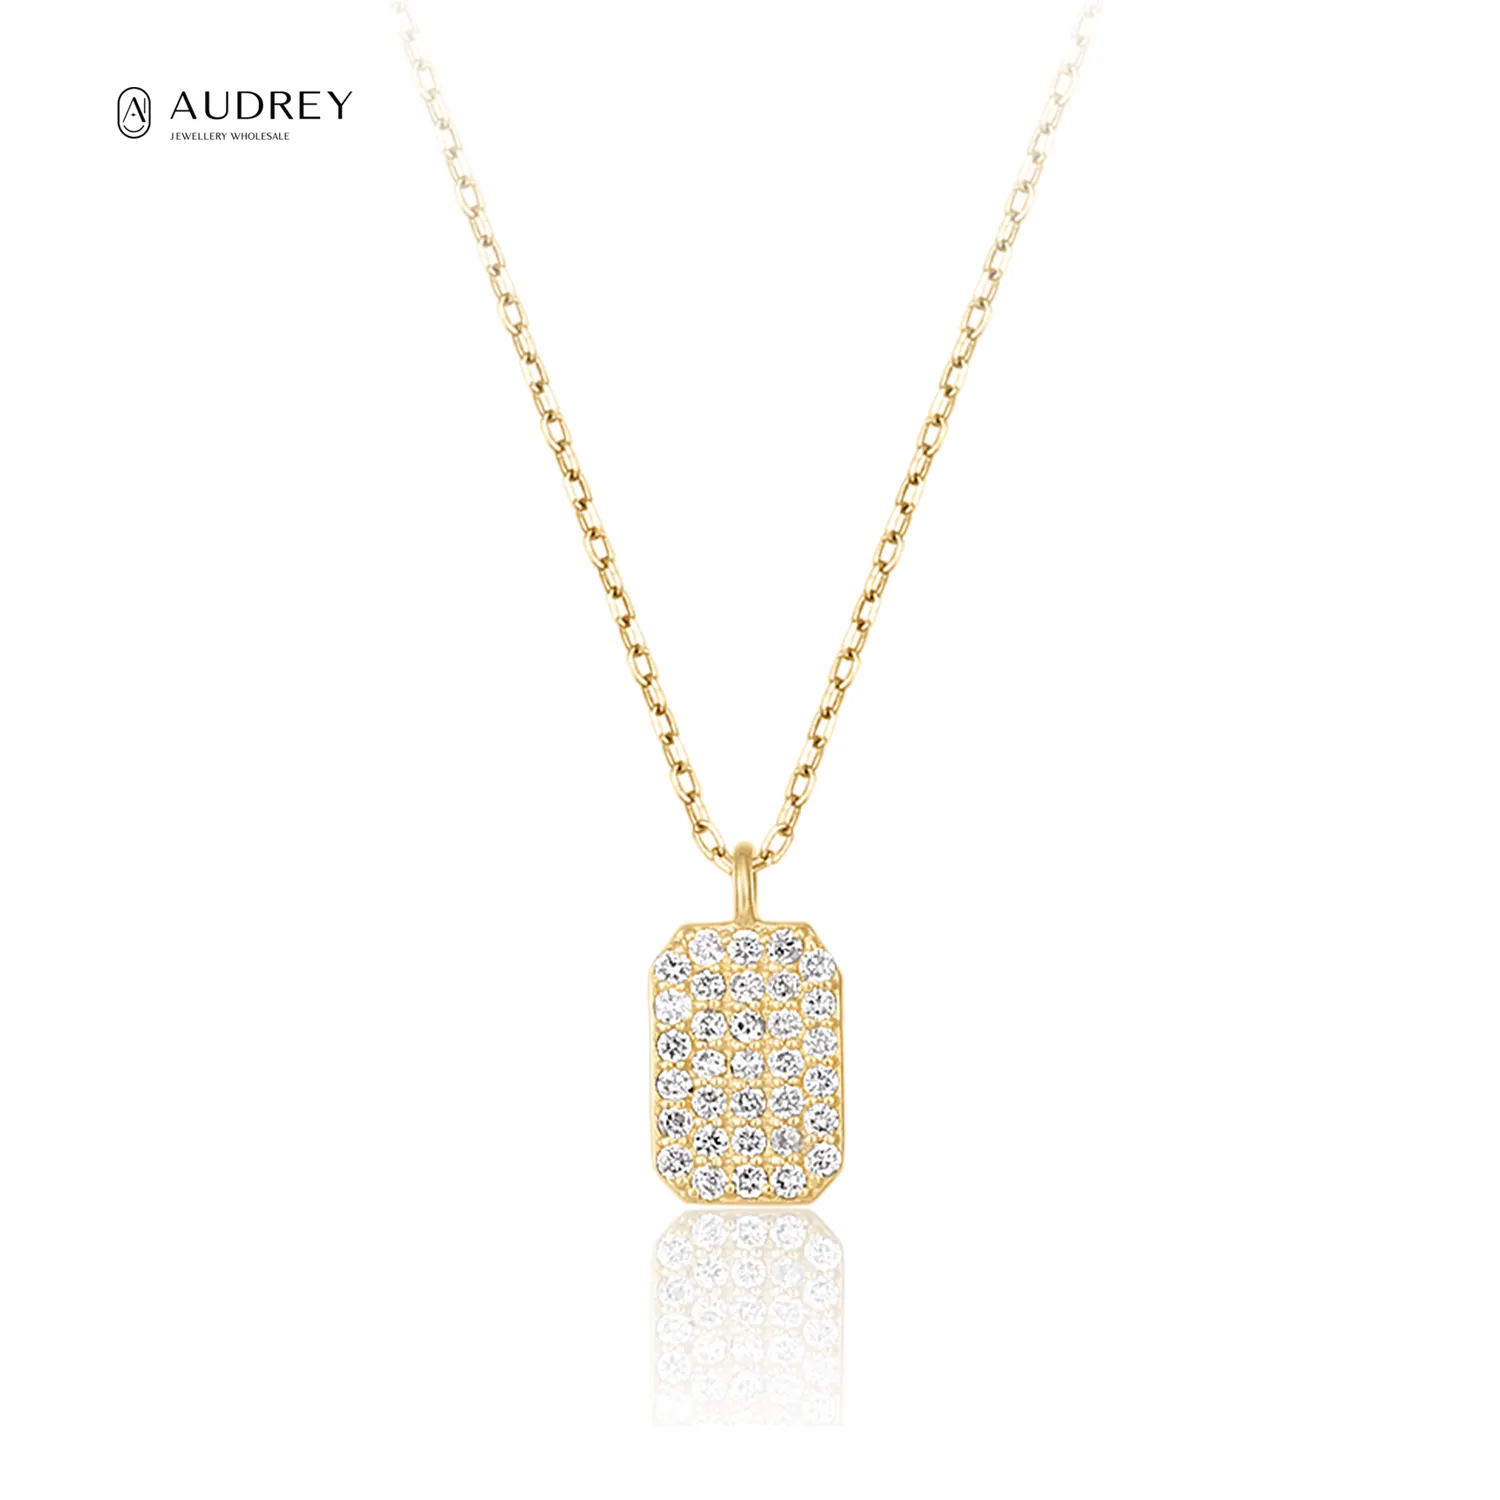 Audrey Women Fine Jewelry Beautifully Designed Diamond Necklace 14K Solid Gold Jewelry Geometric Pendant Necklace